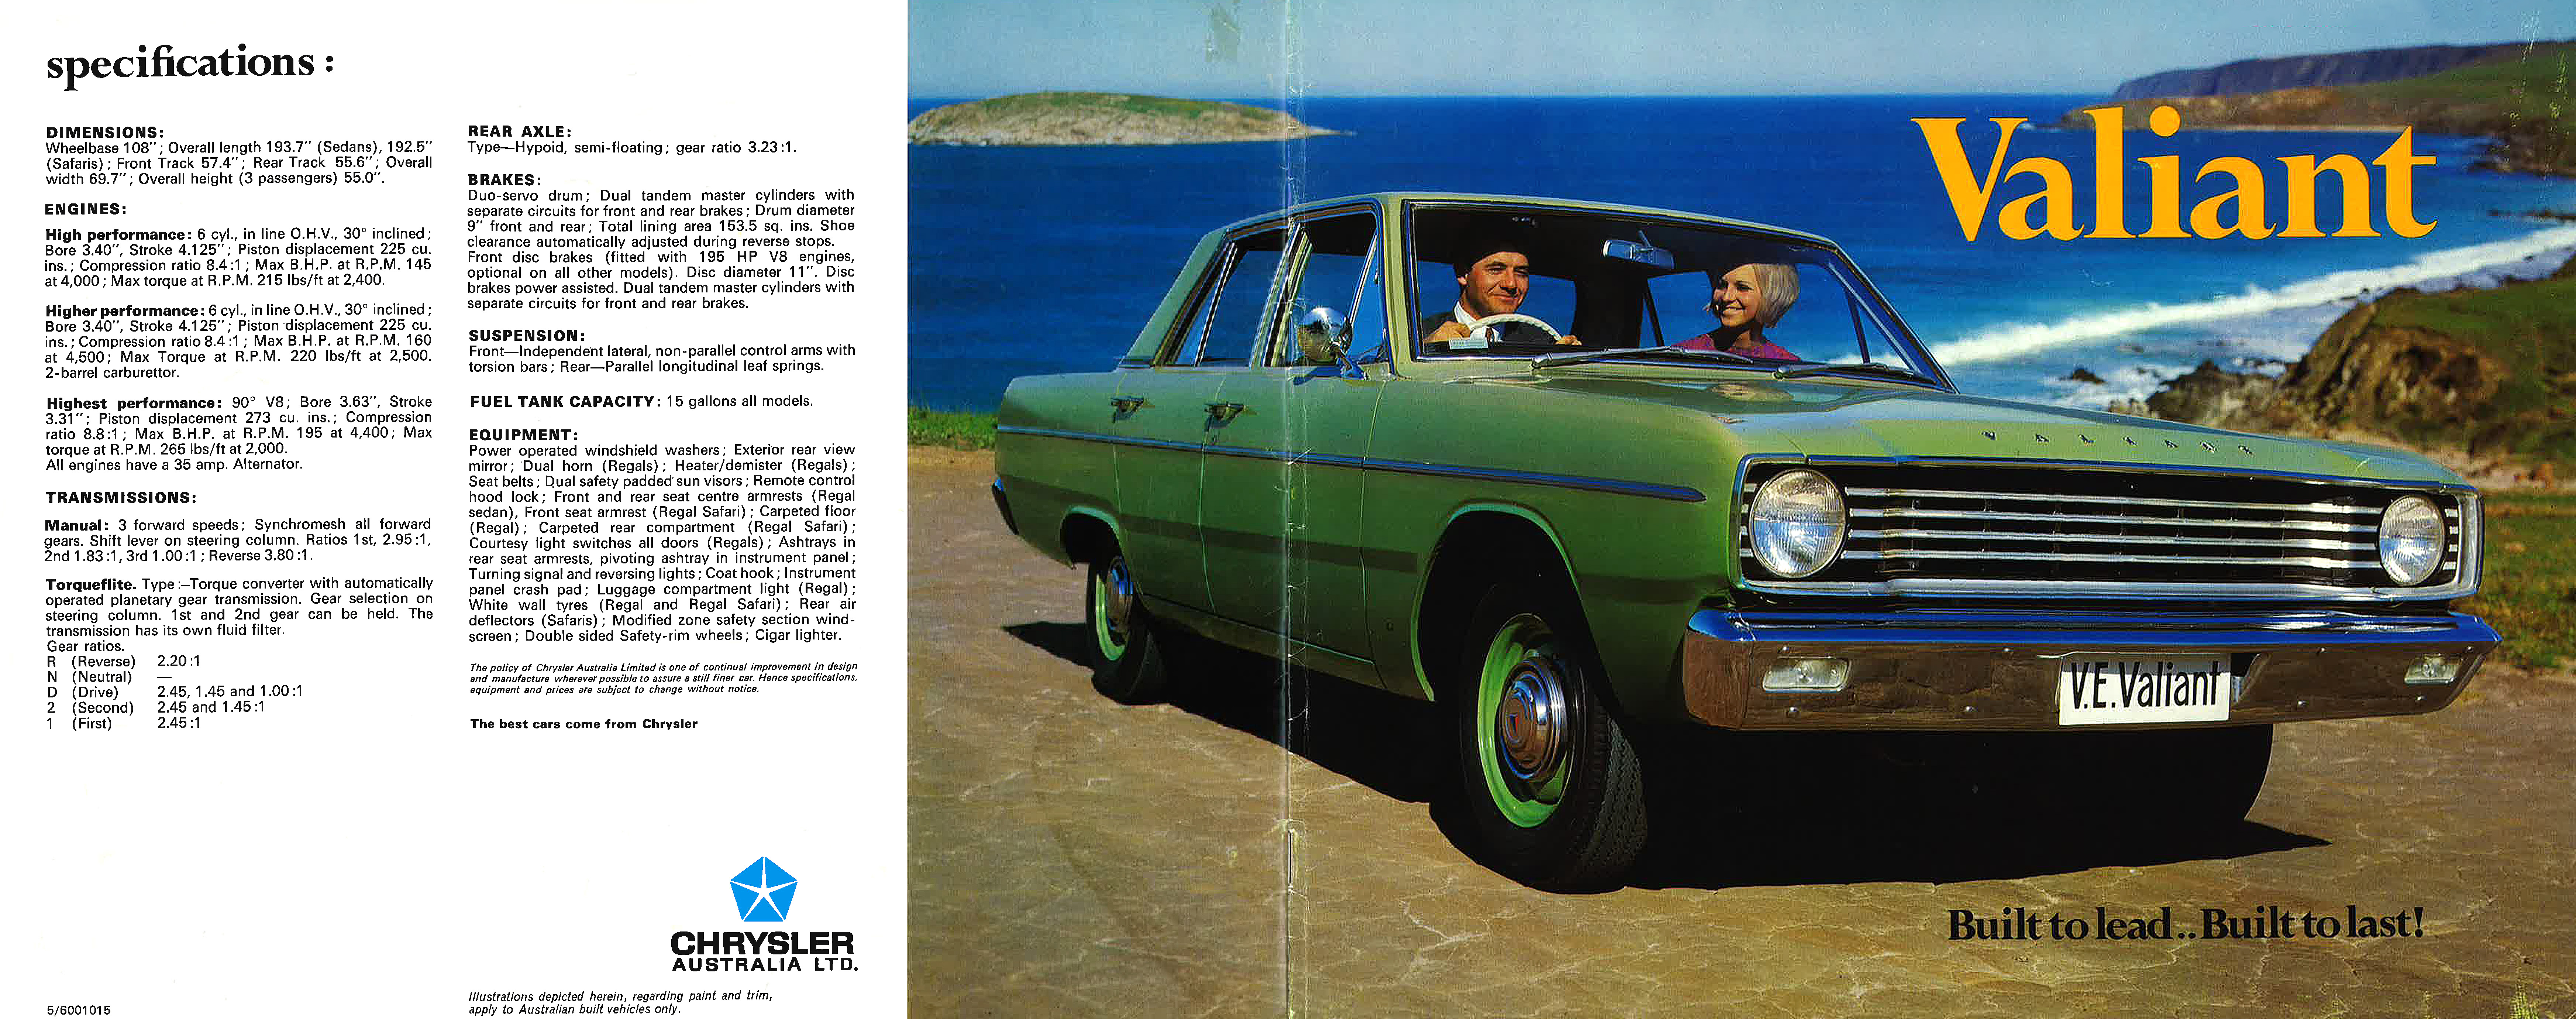 1967 Valiant VE - Australia page_01_12